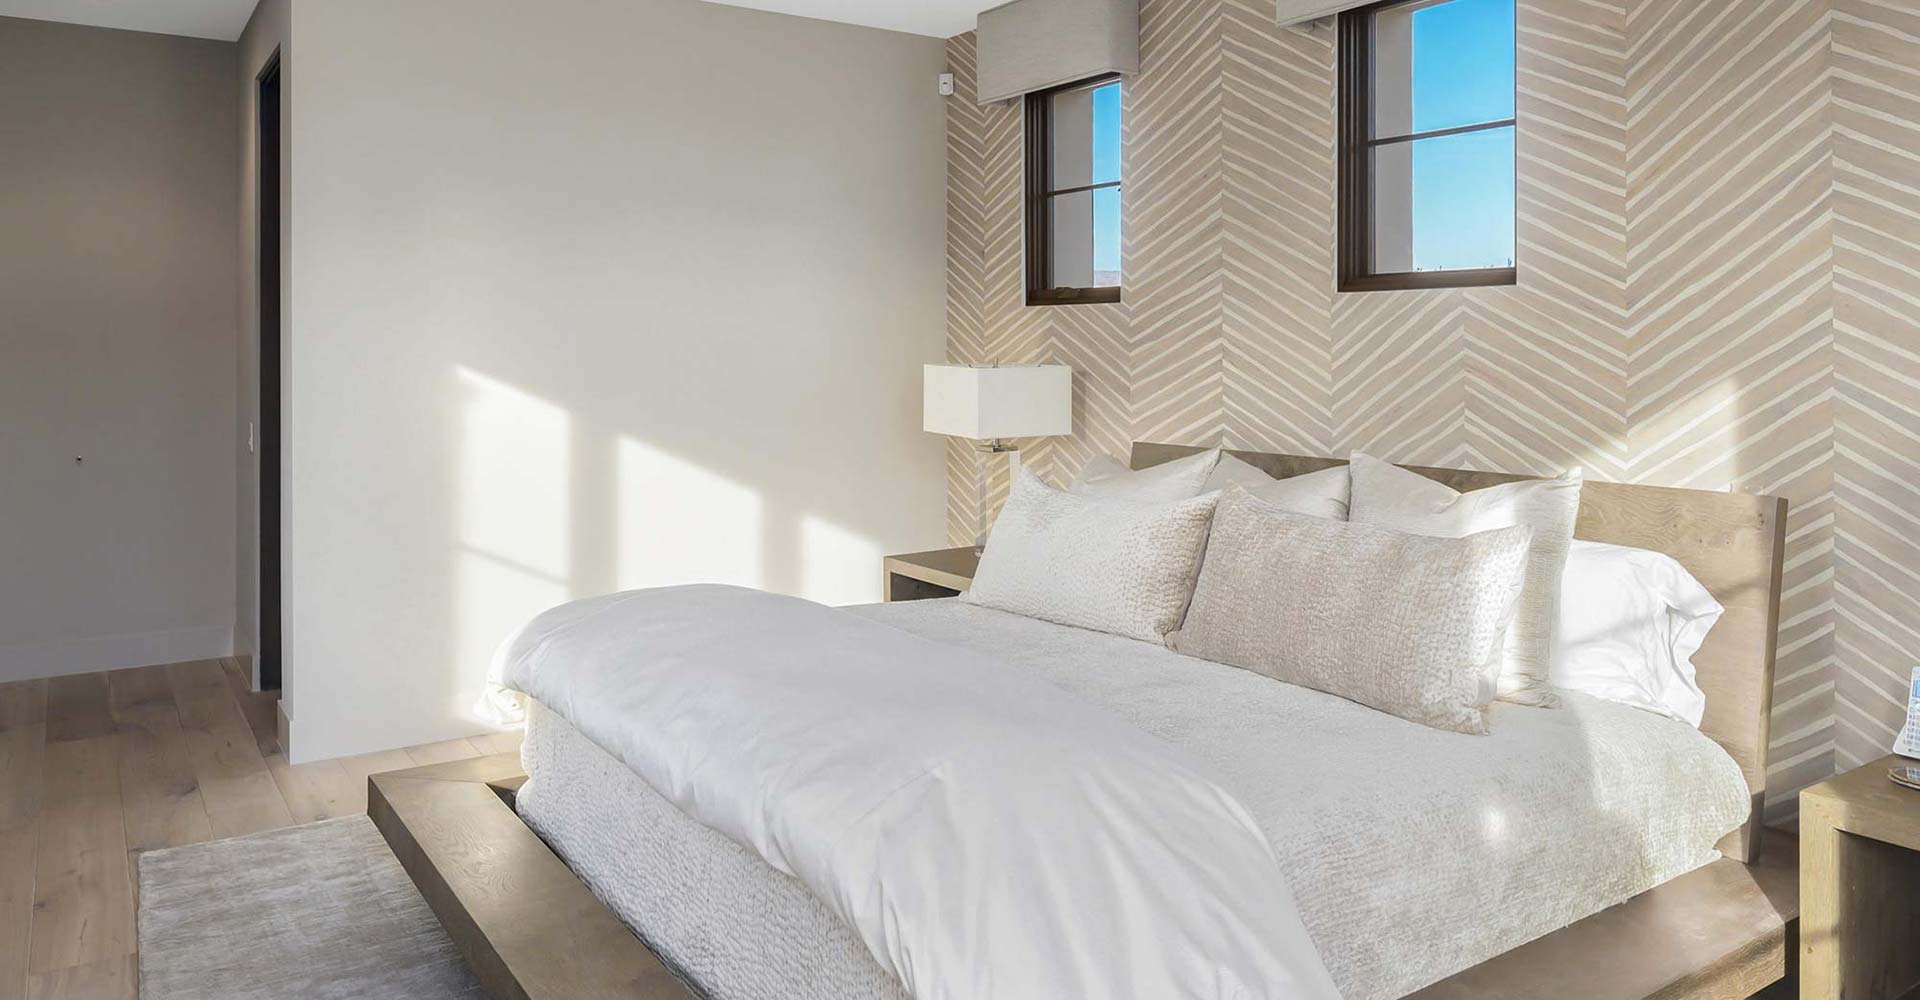 White crisp bedroom with unique wall design